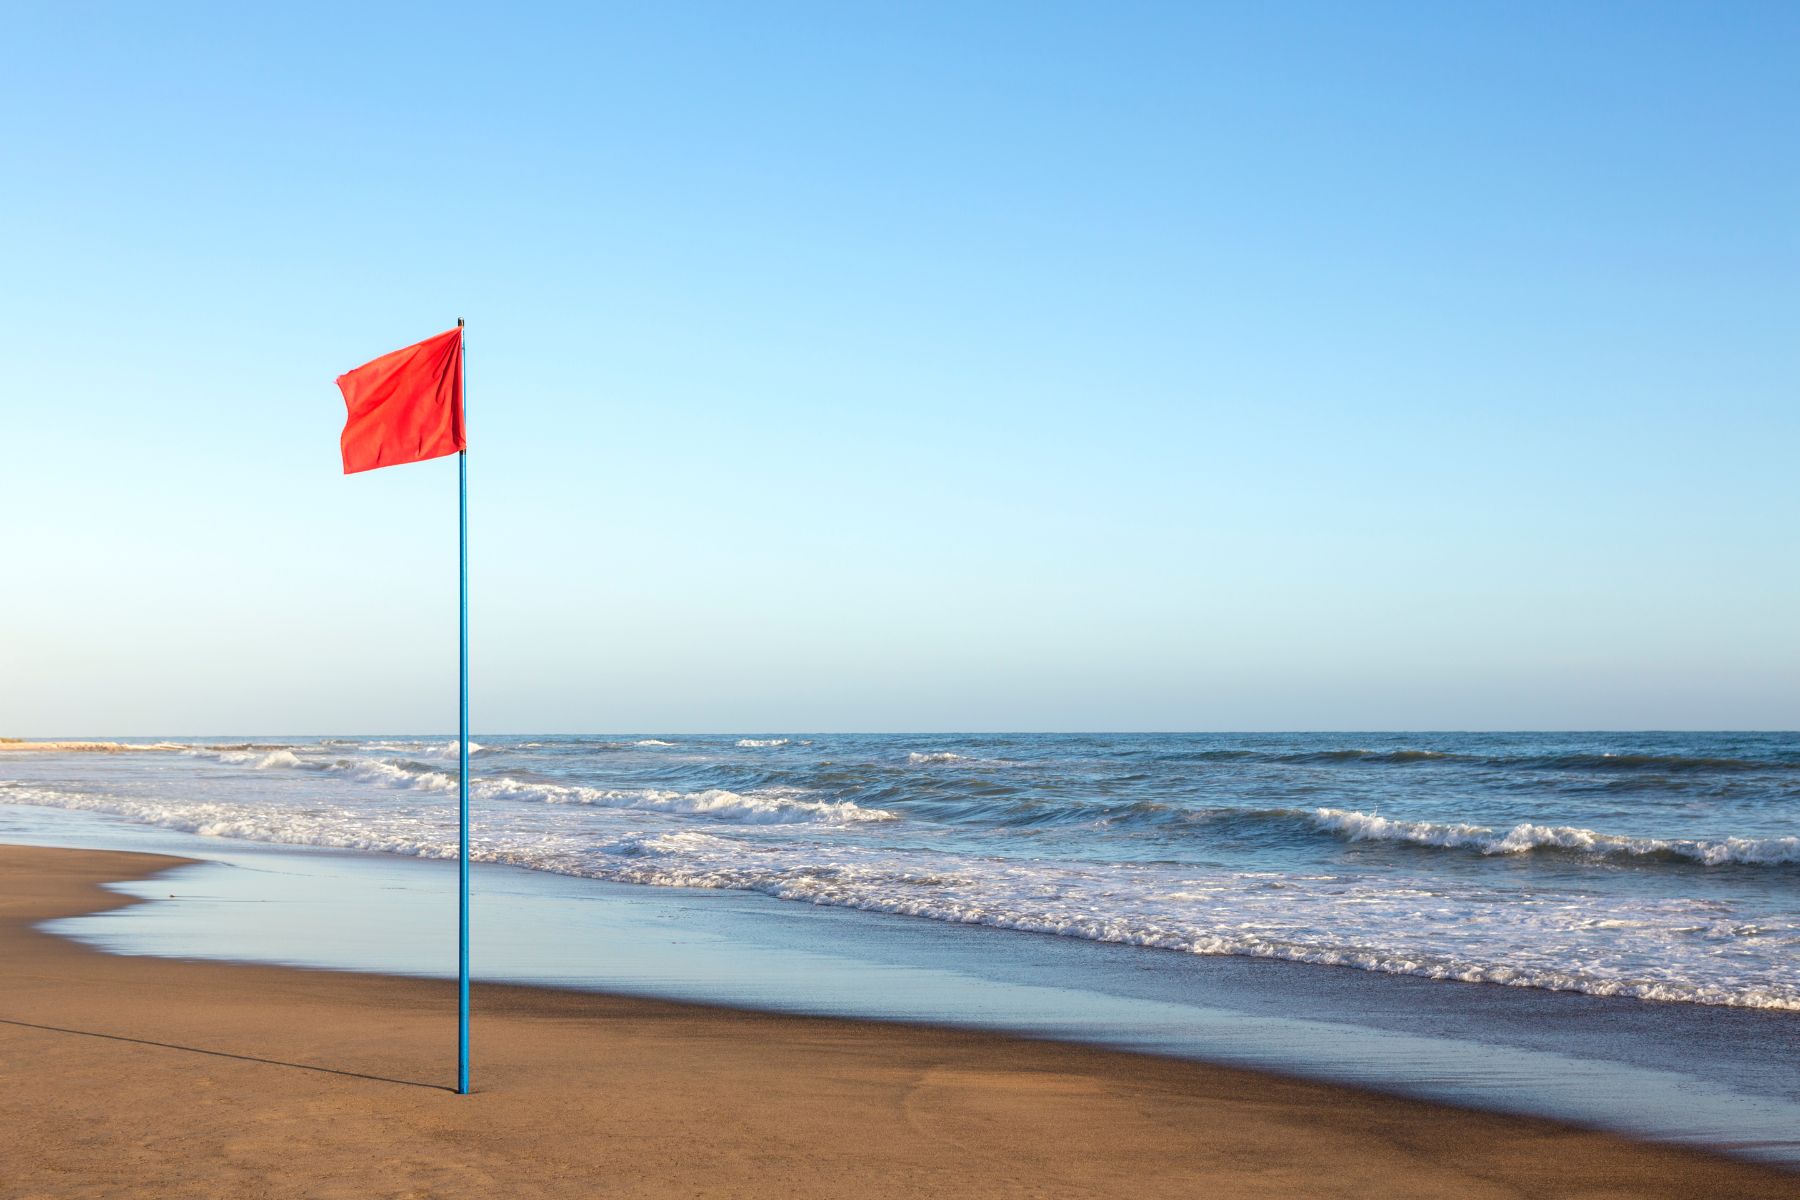 Red flag at the beach to warn beachgoers.